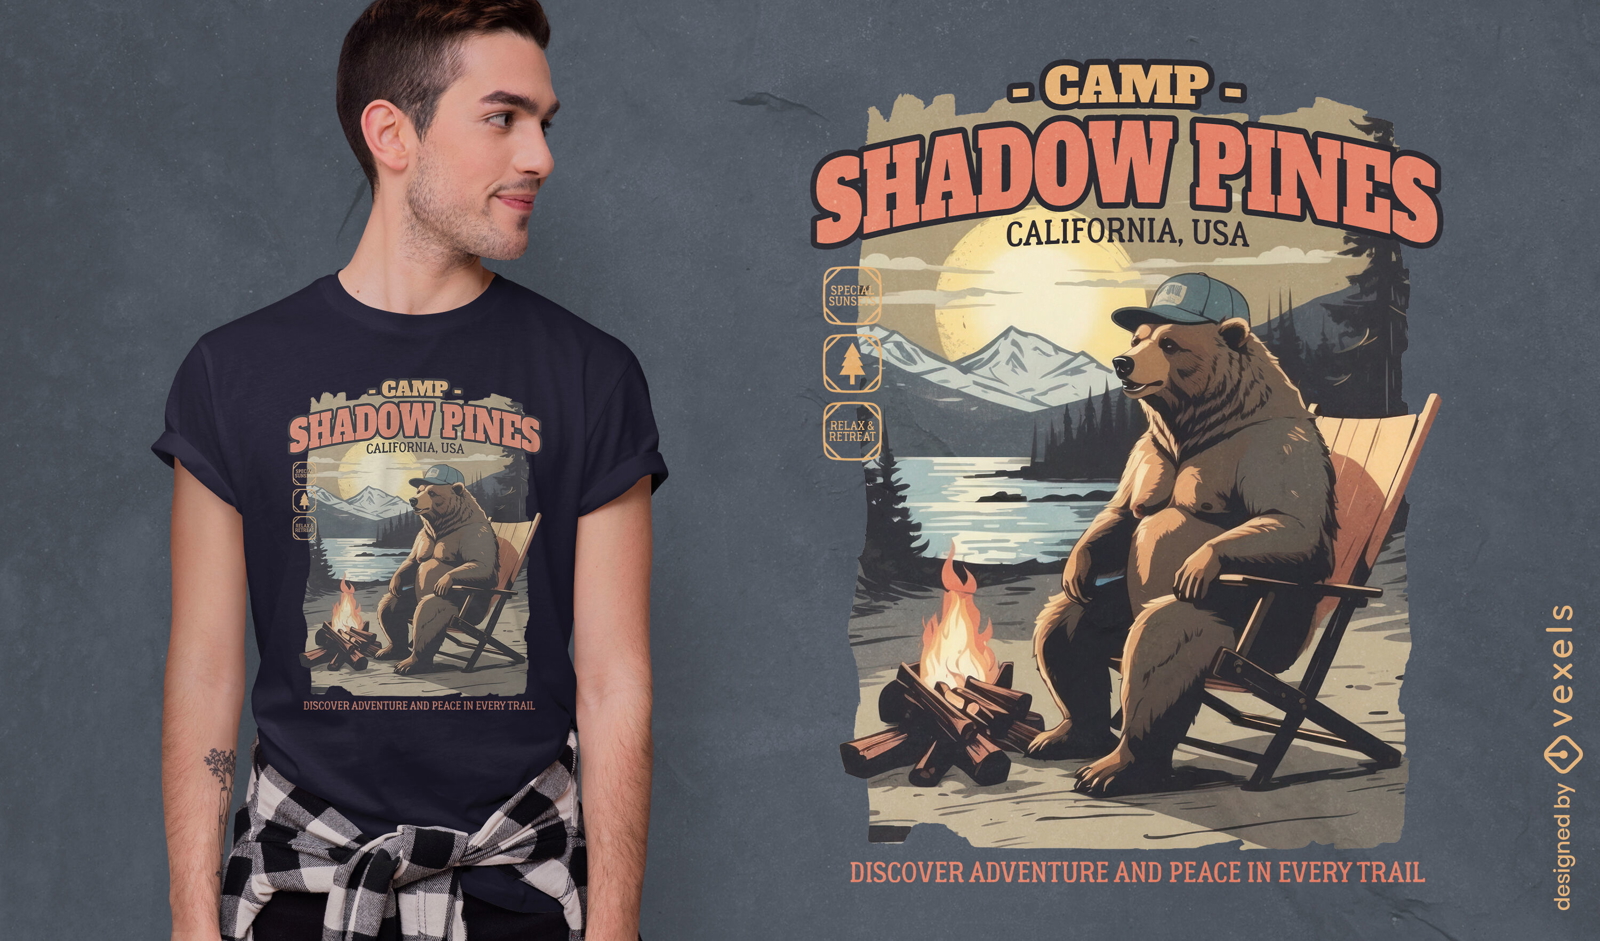 Camp shadow pines california usa t-shirt design